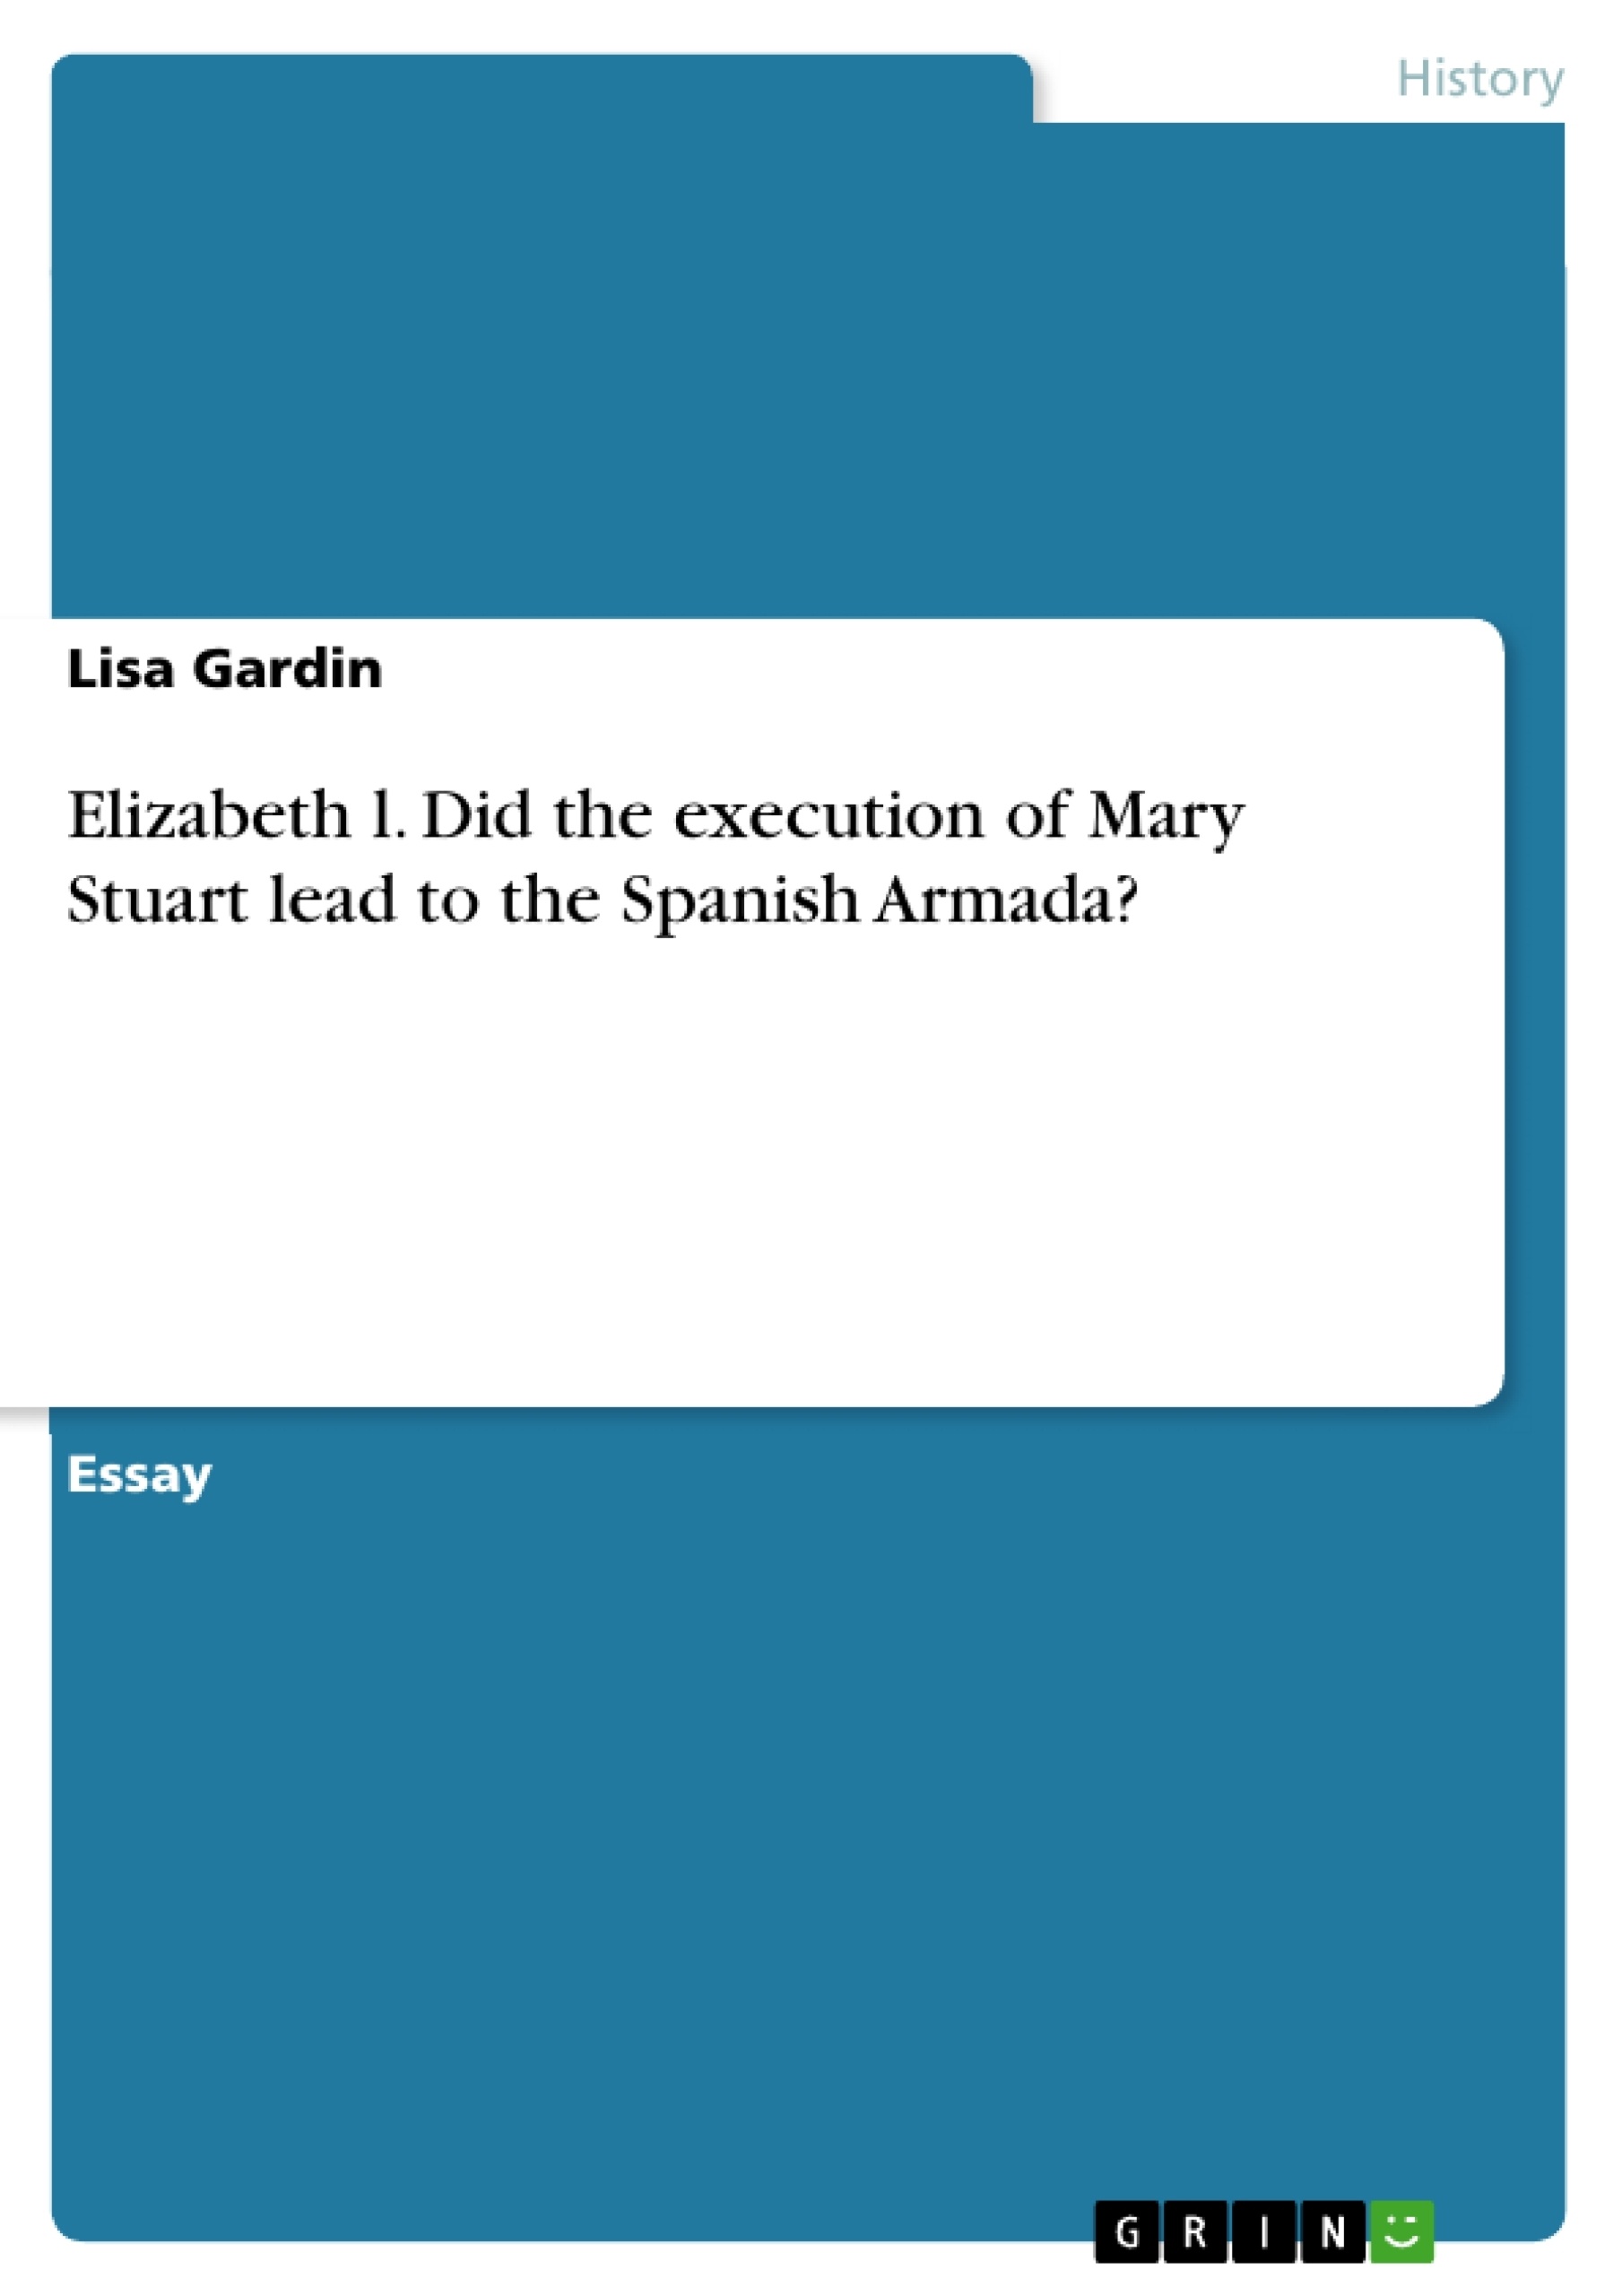 Title: Elizabeth l. Did the execution of Mary Stuart lead to the Spanish Armada?